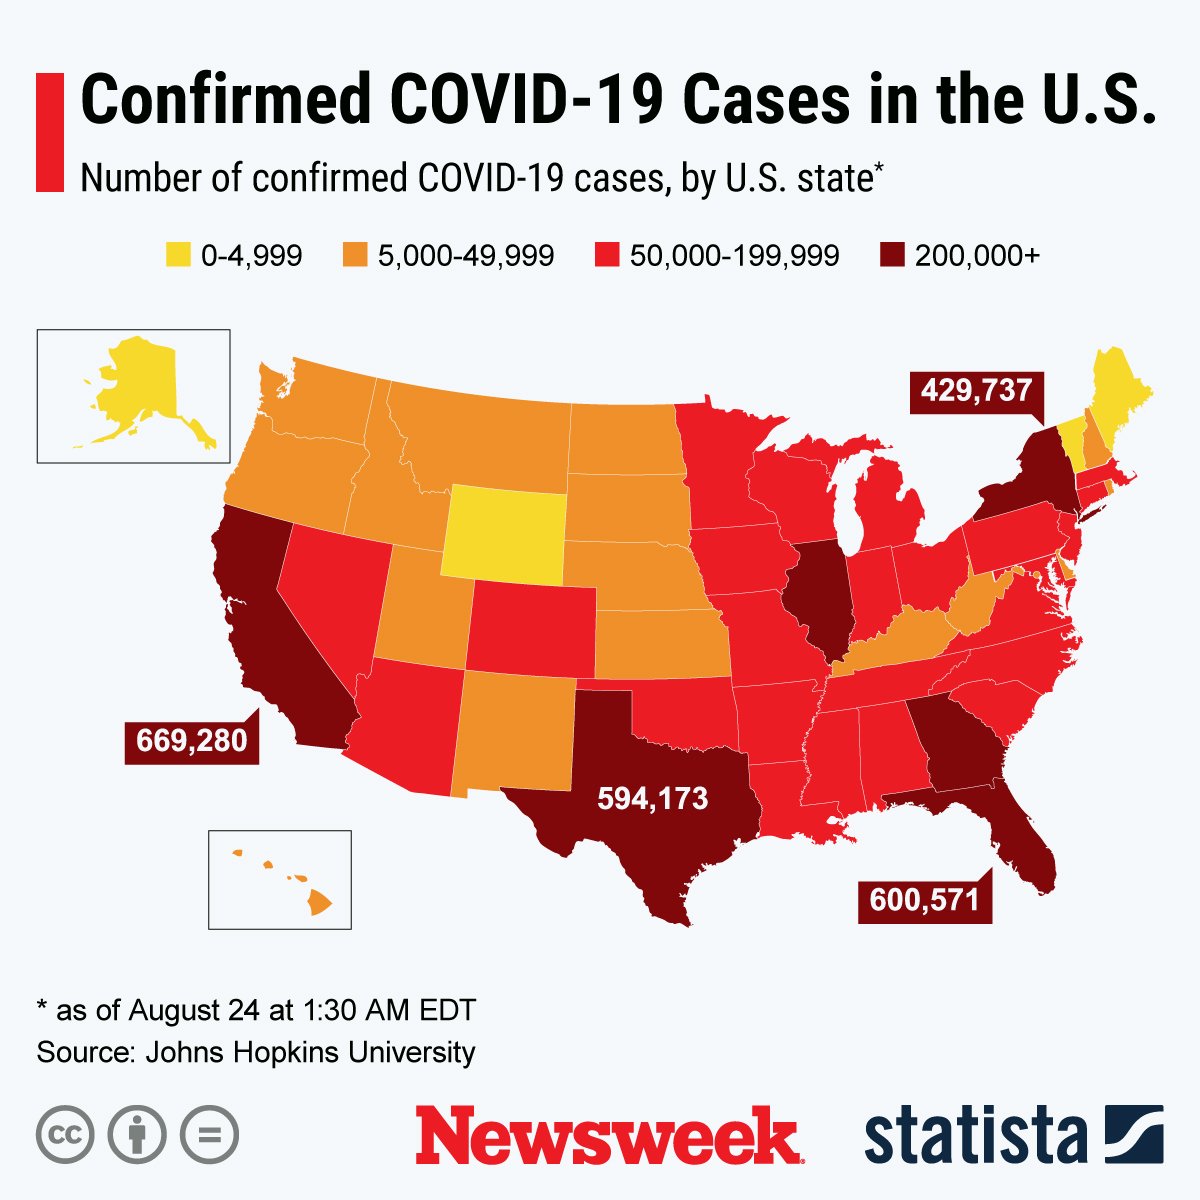 COVID-19 cases in U.S.